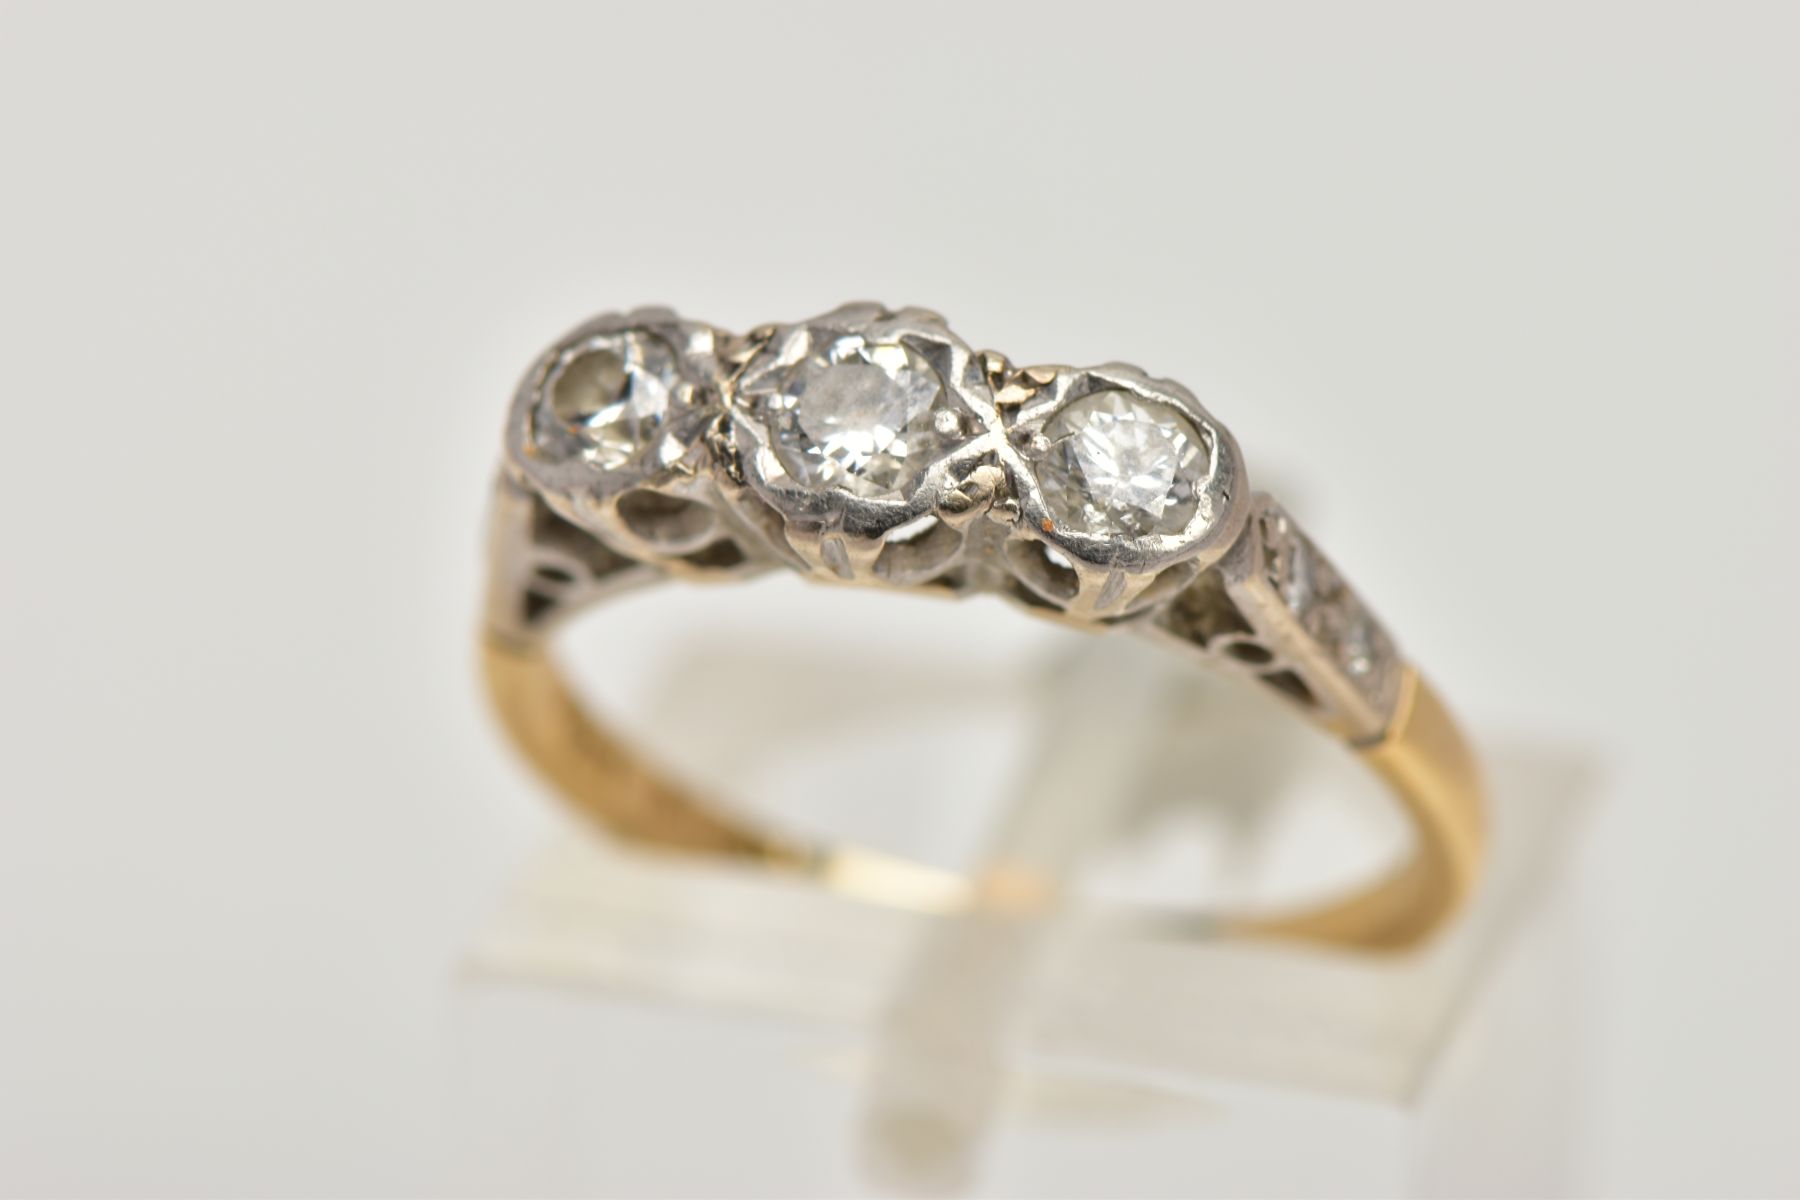 A THREE STONE DIAMOND RING, designed as three graduated brilliant cut diamonds with single cut